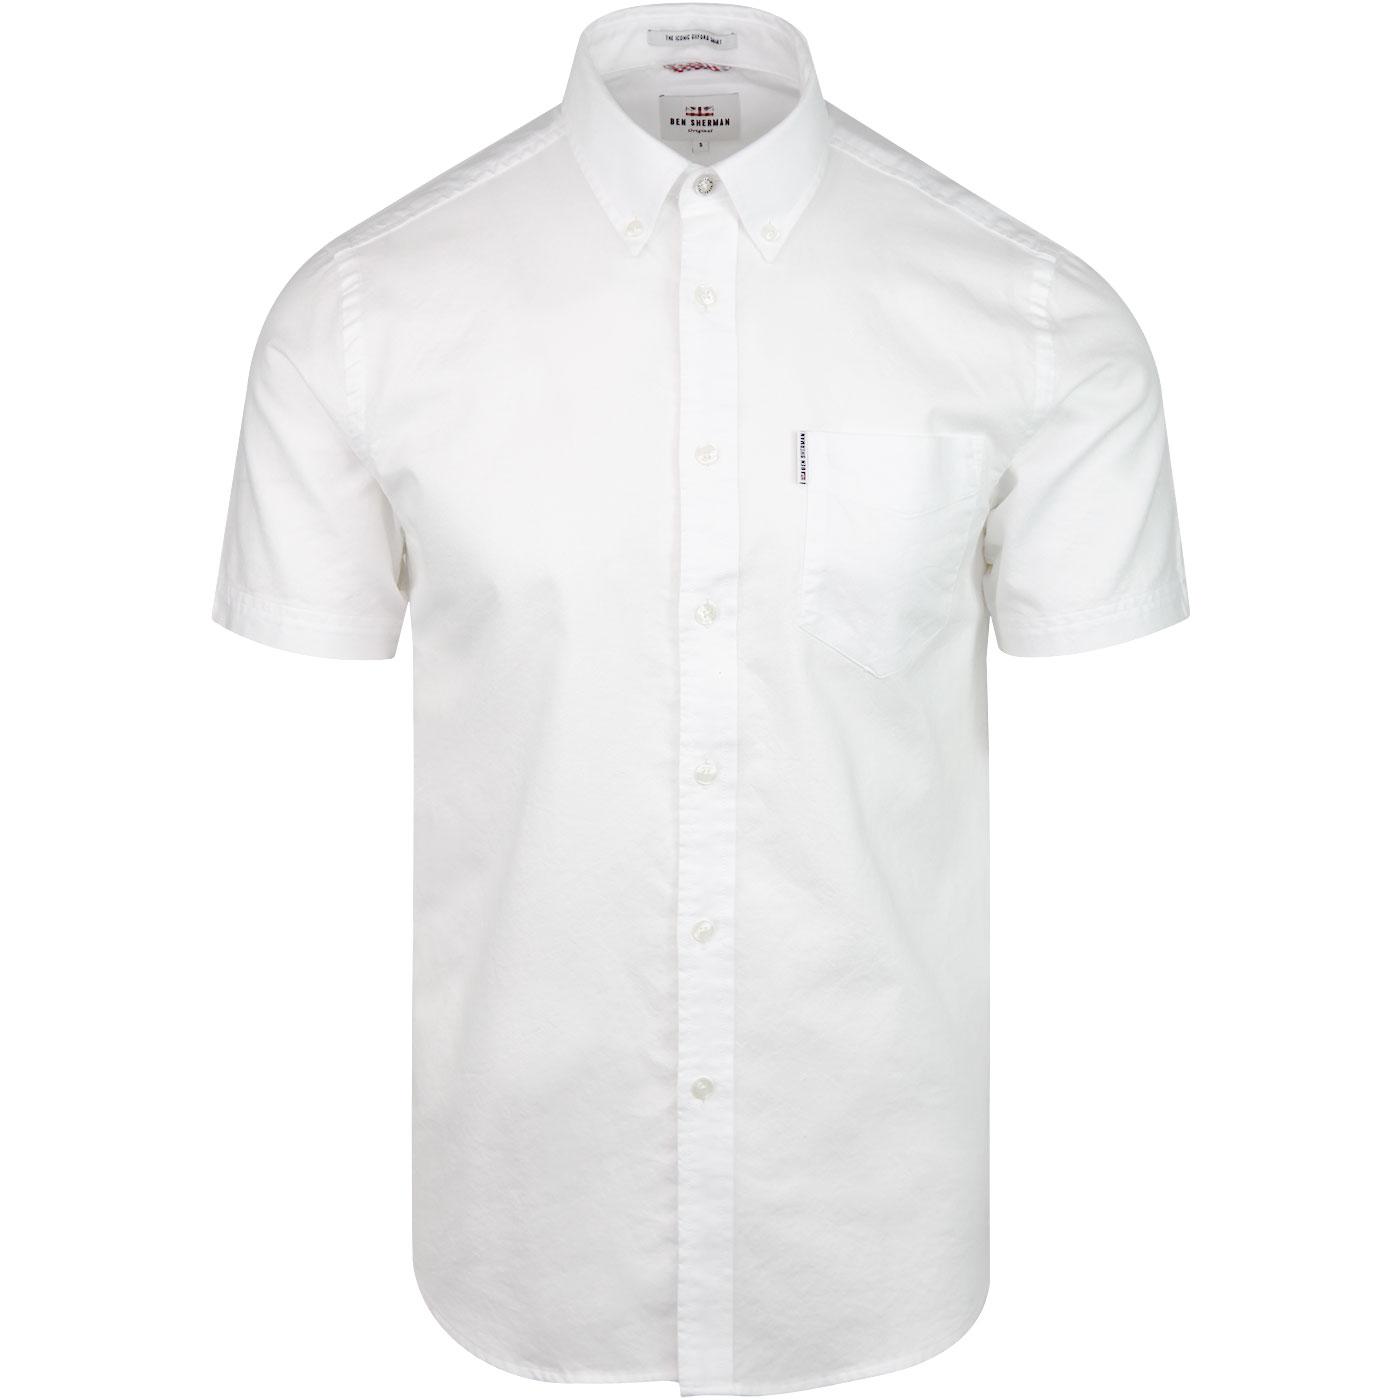 BEN SHERMAN Retro Mod Short Sleeve Oxford Shirt in White